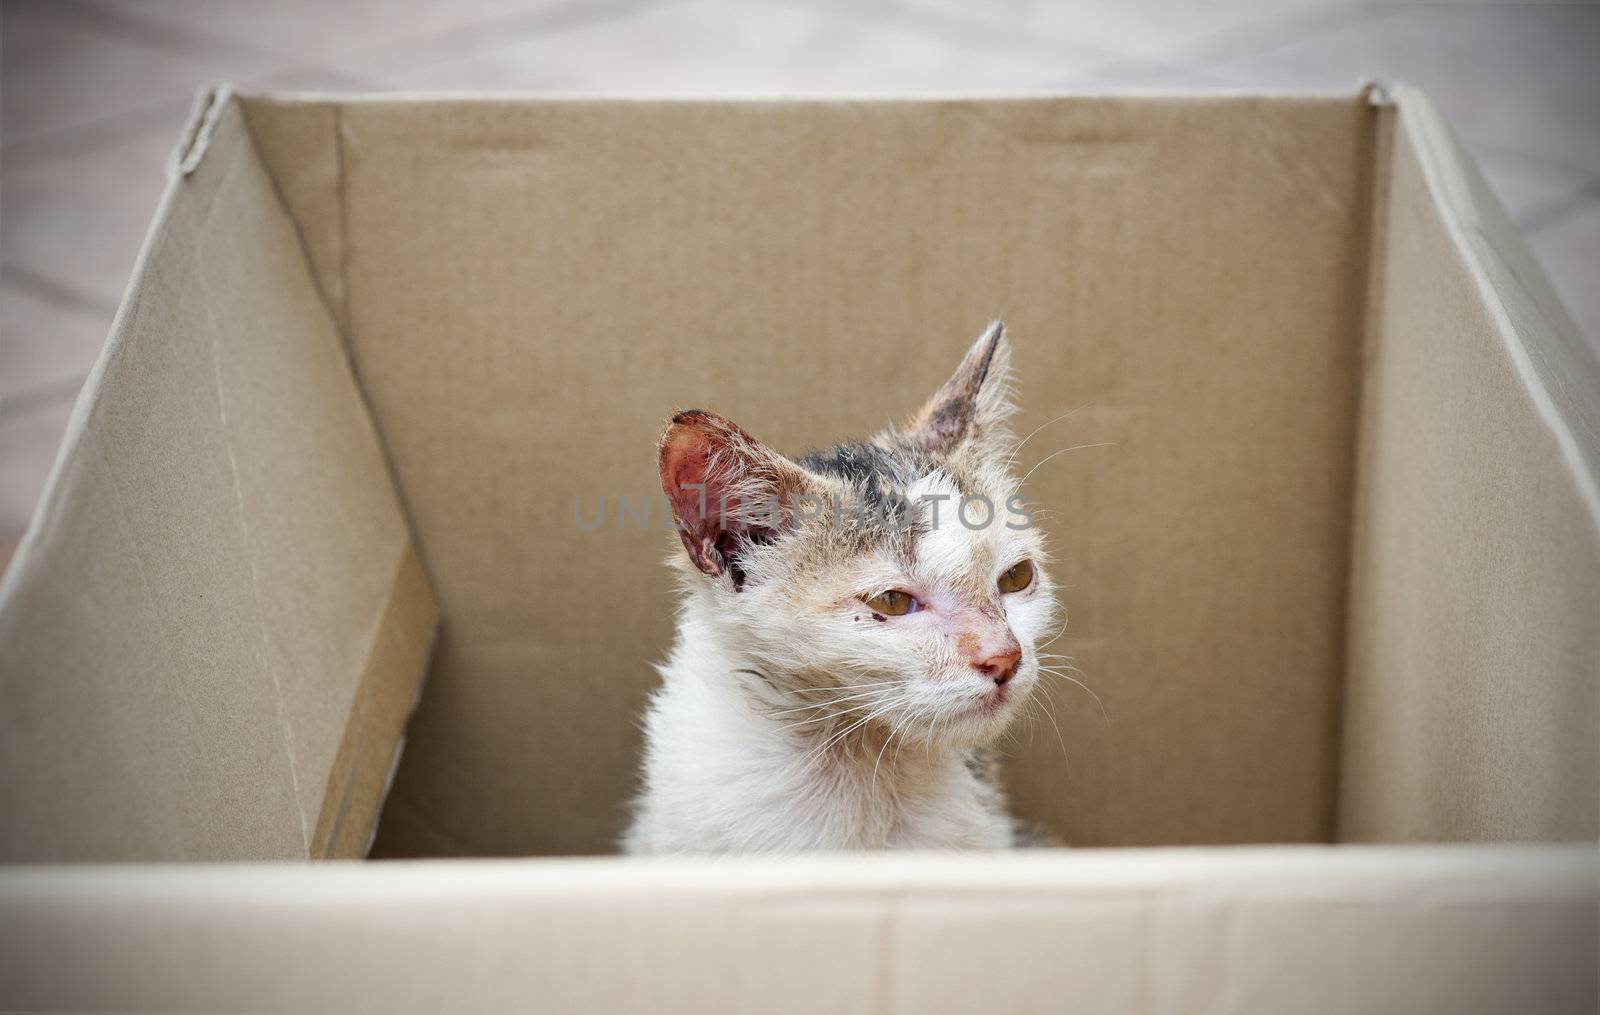 diseased stray cat being rescued